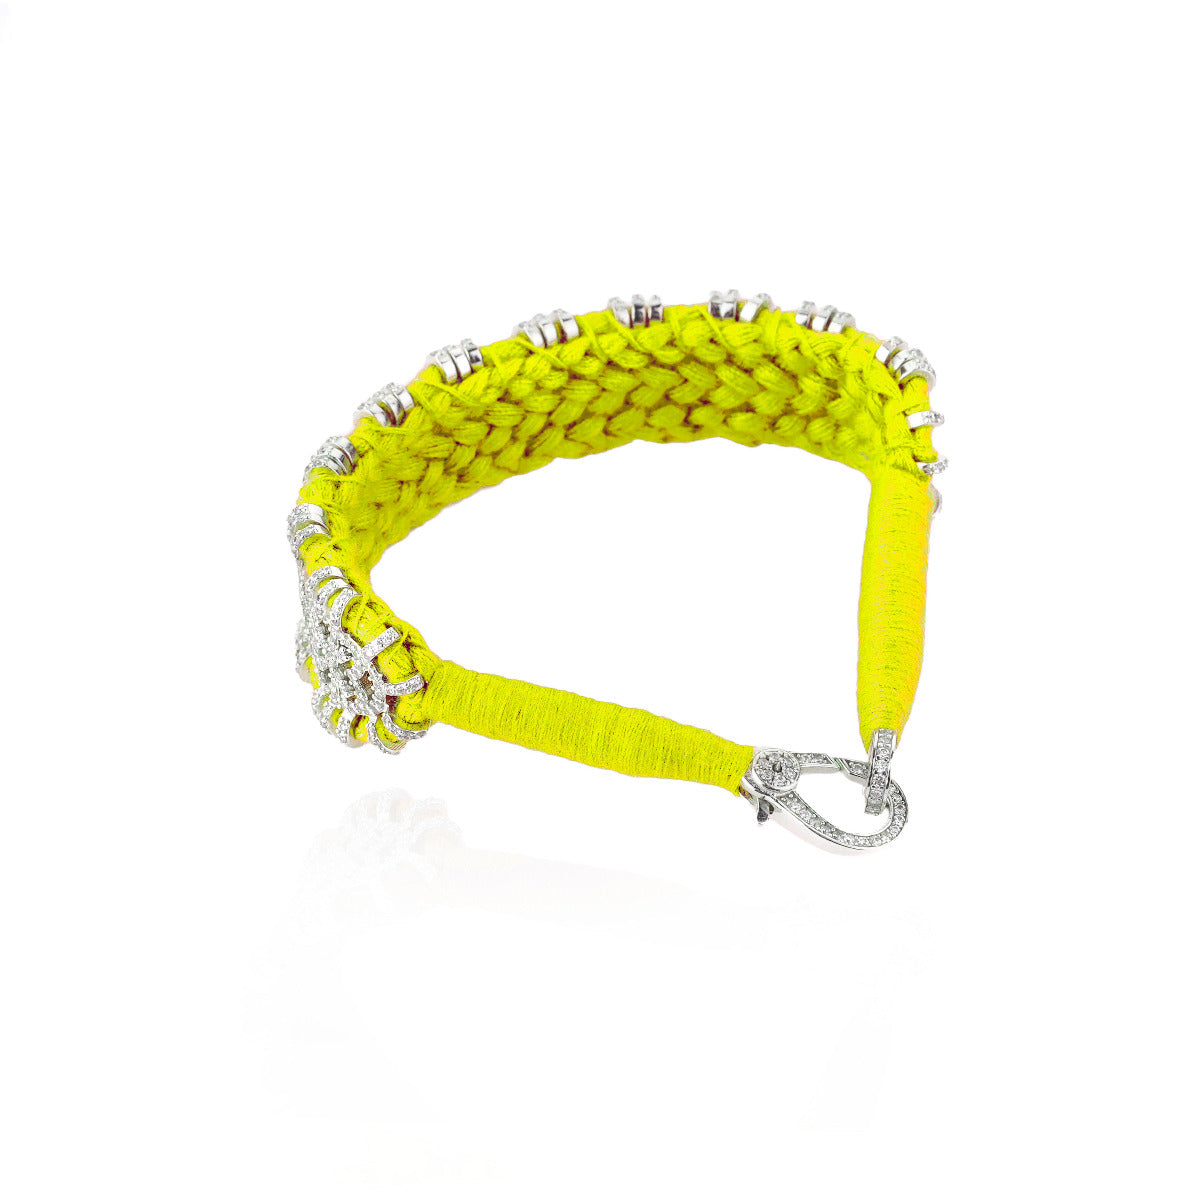 Bracelet Salvador jaune fluo